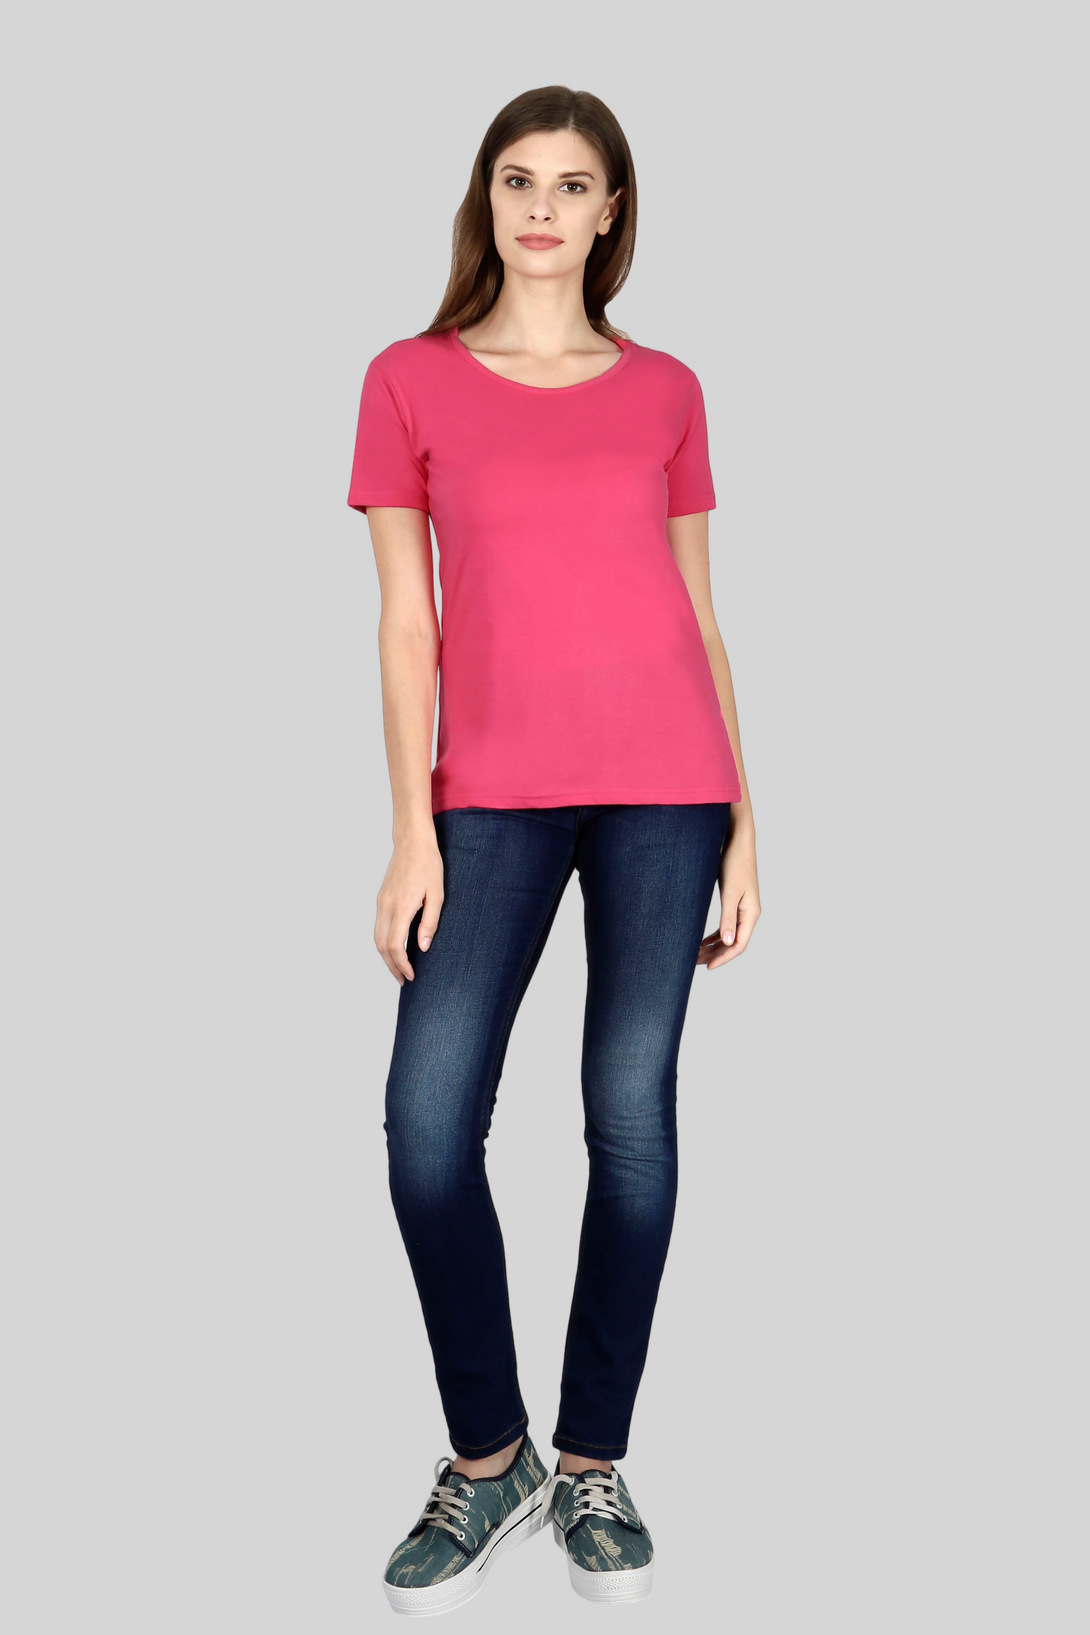 Pink Scoop Neck T-Shirt For Women - WowWaves - 1